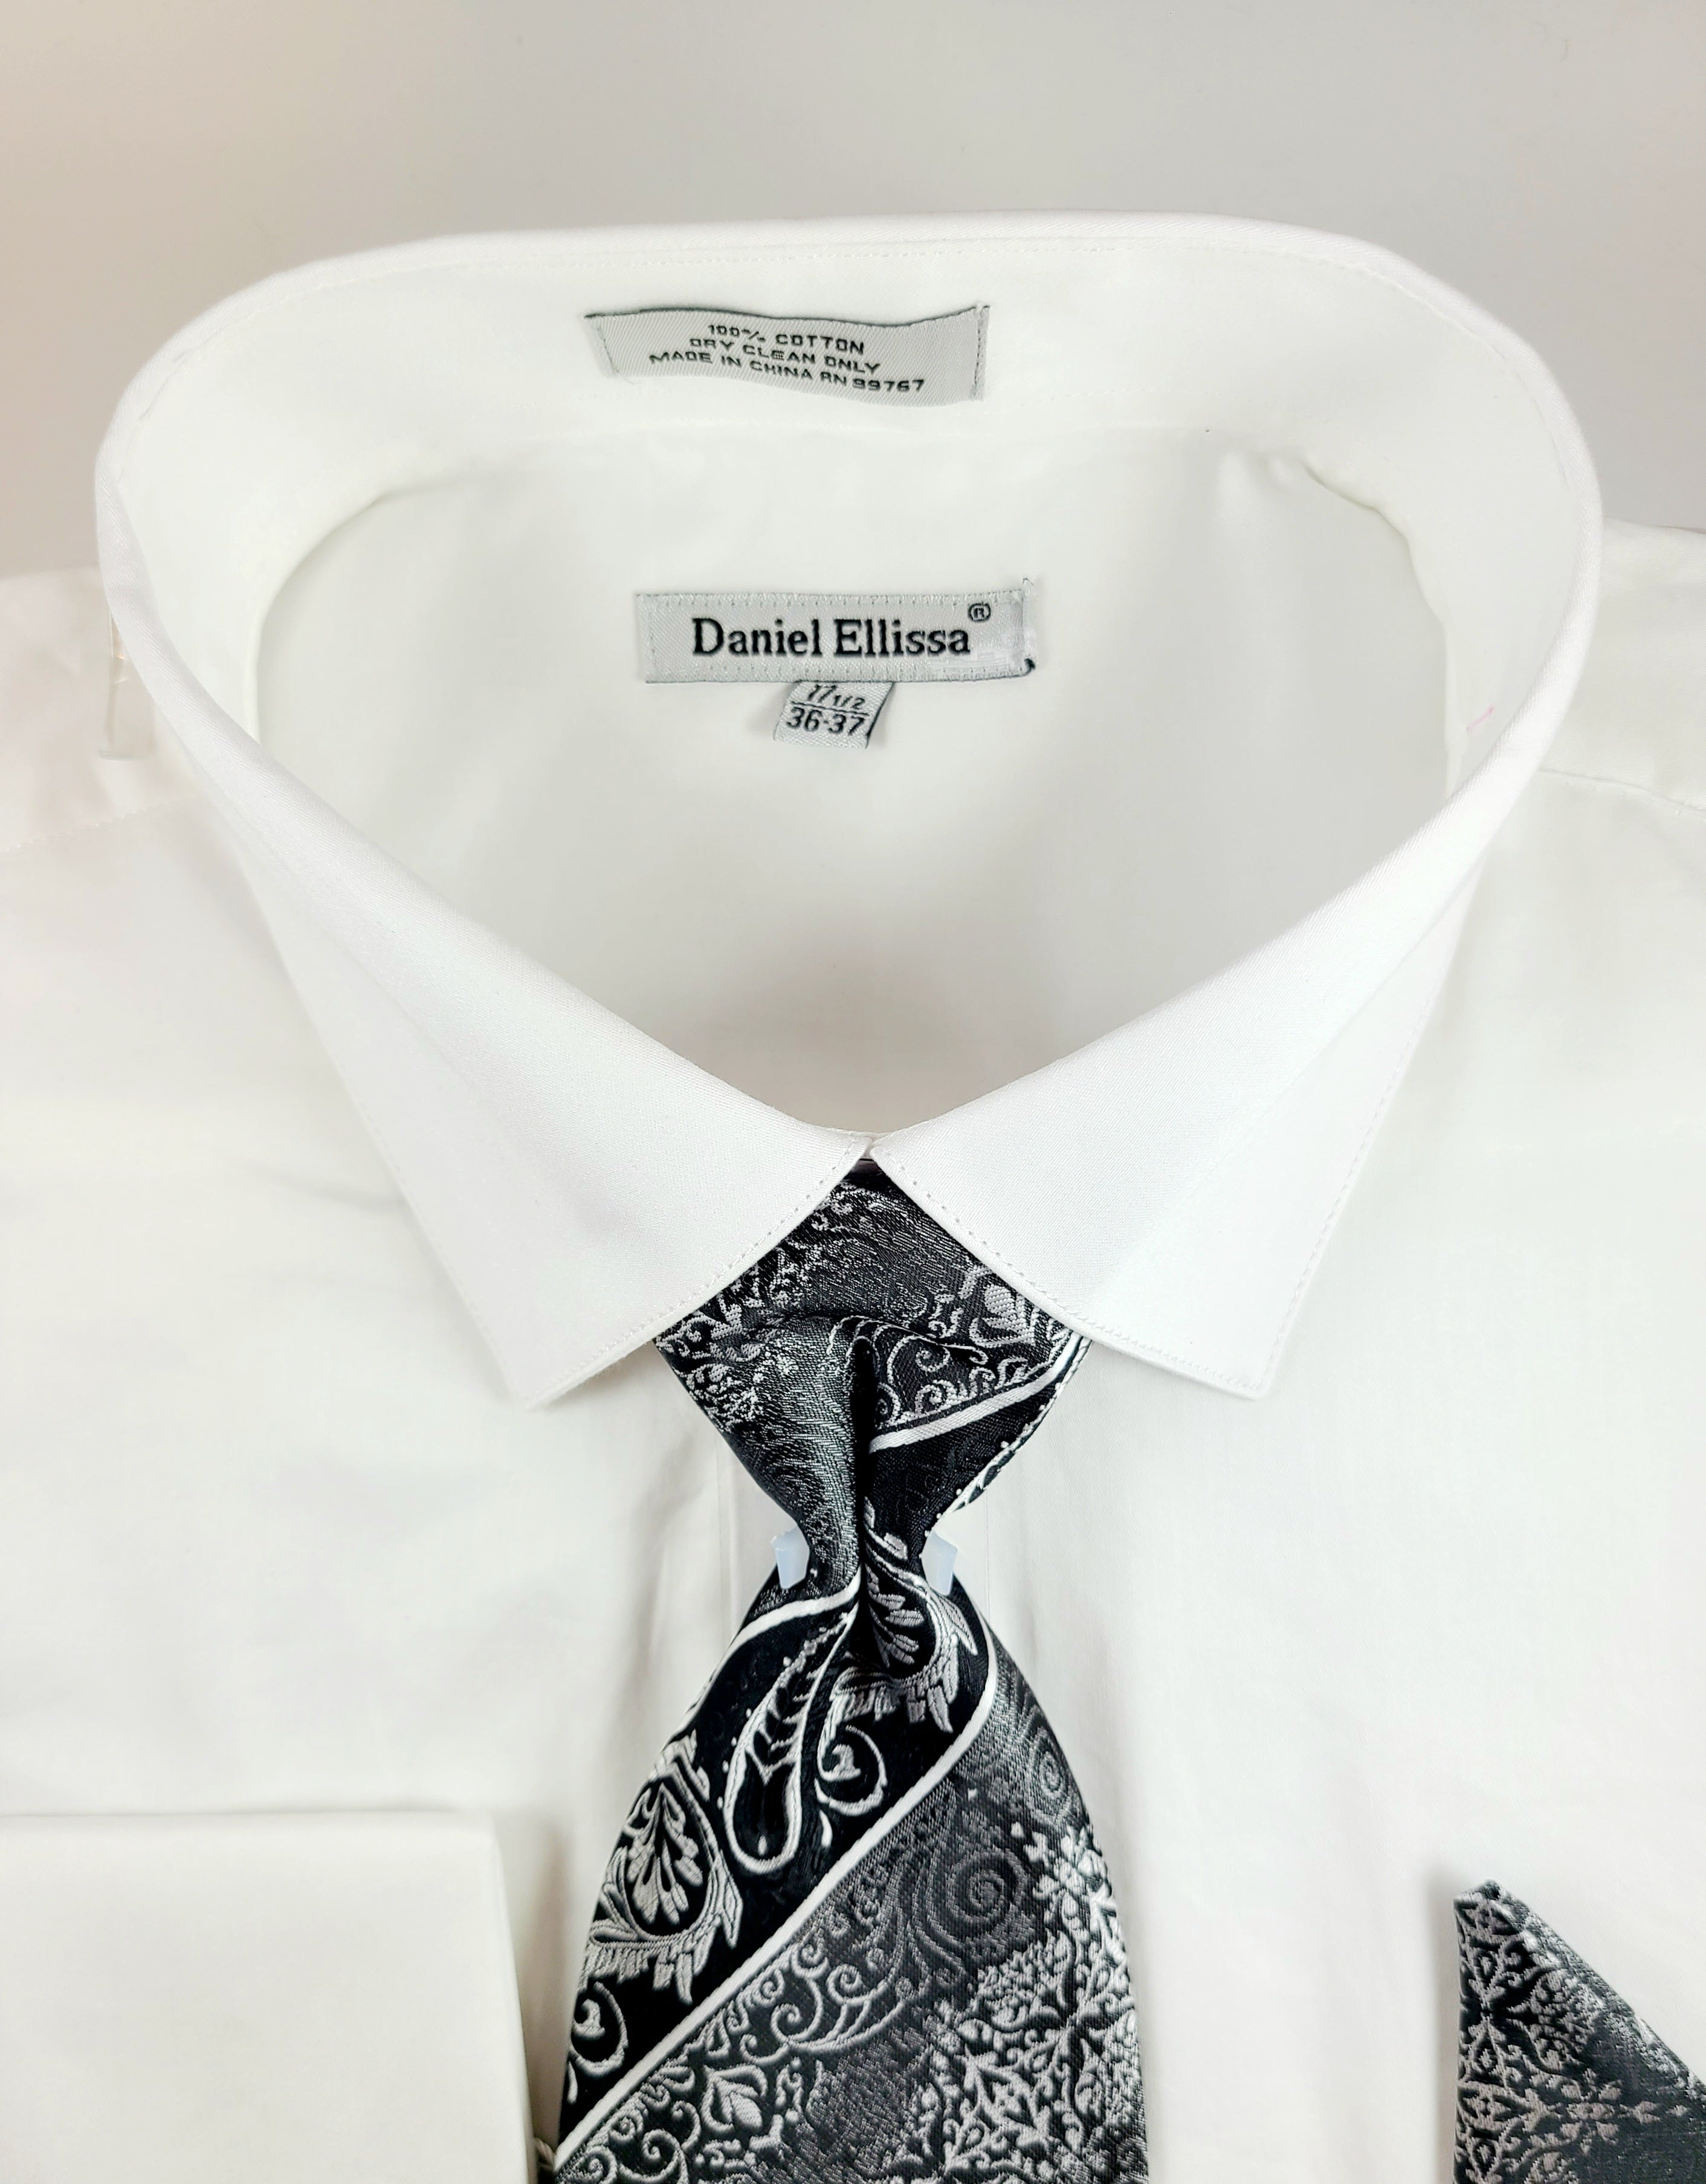 Daniel Elissa Shirt and Tie set